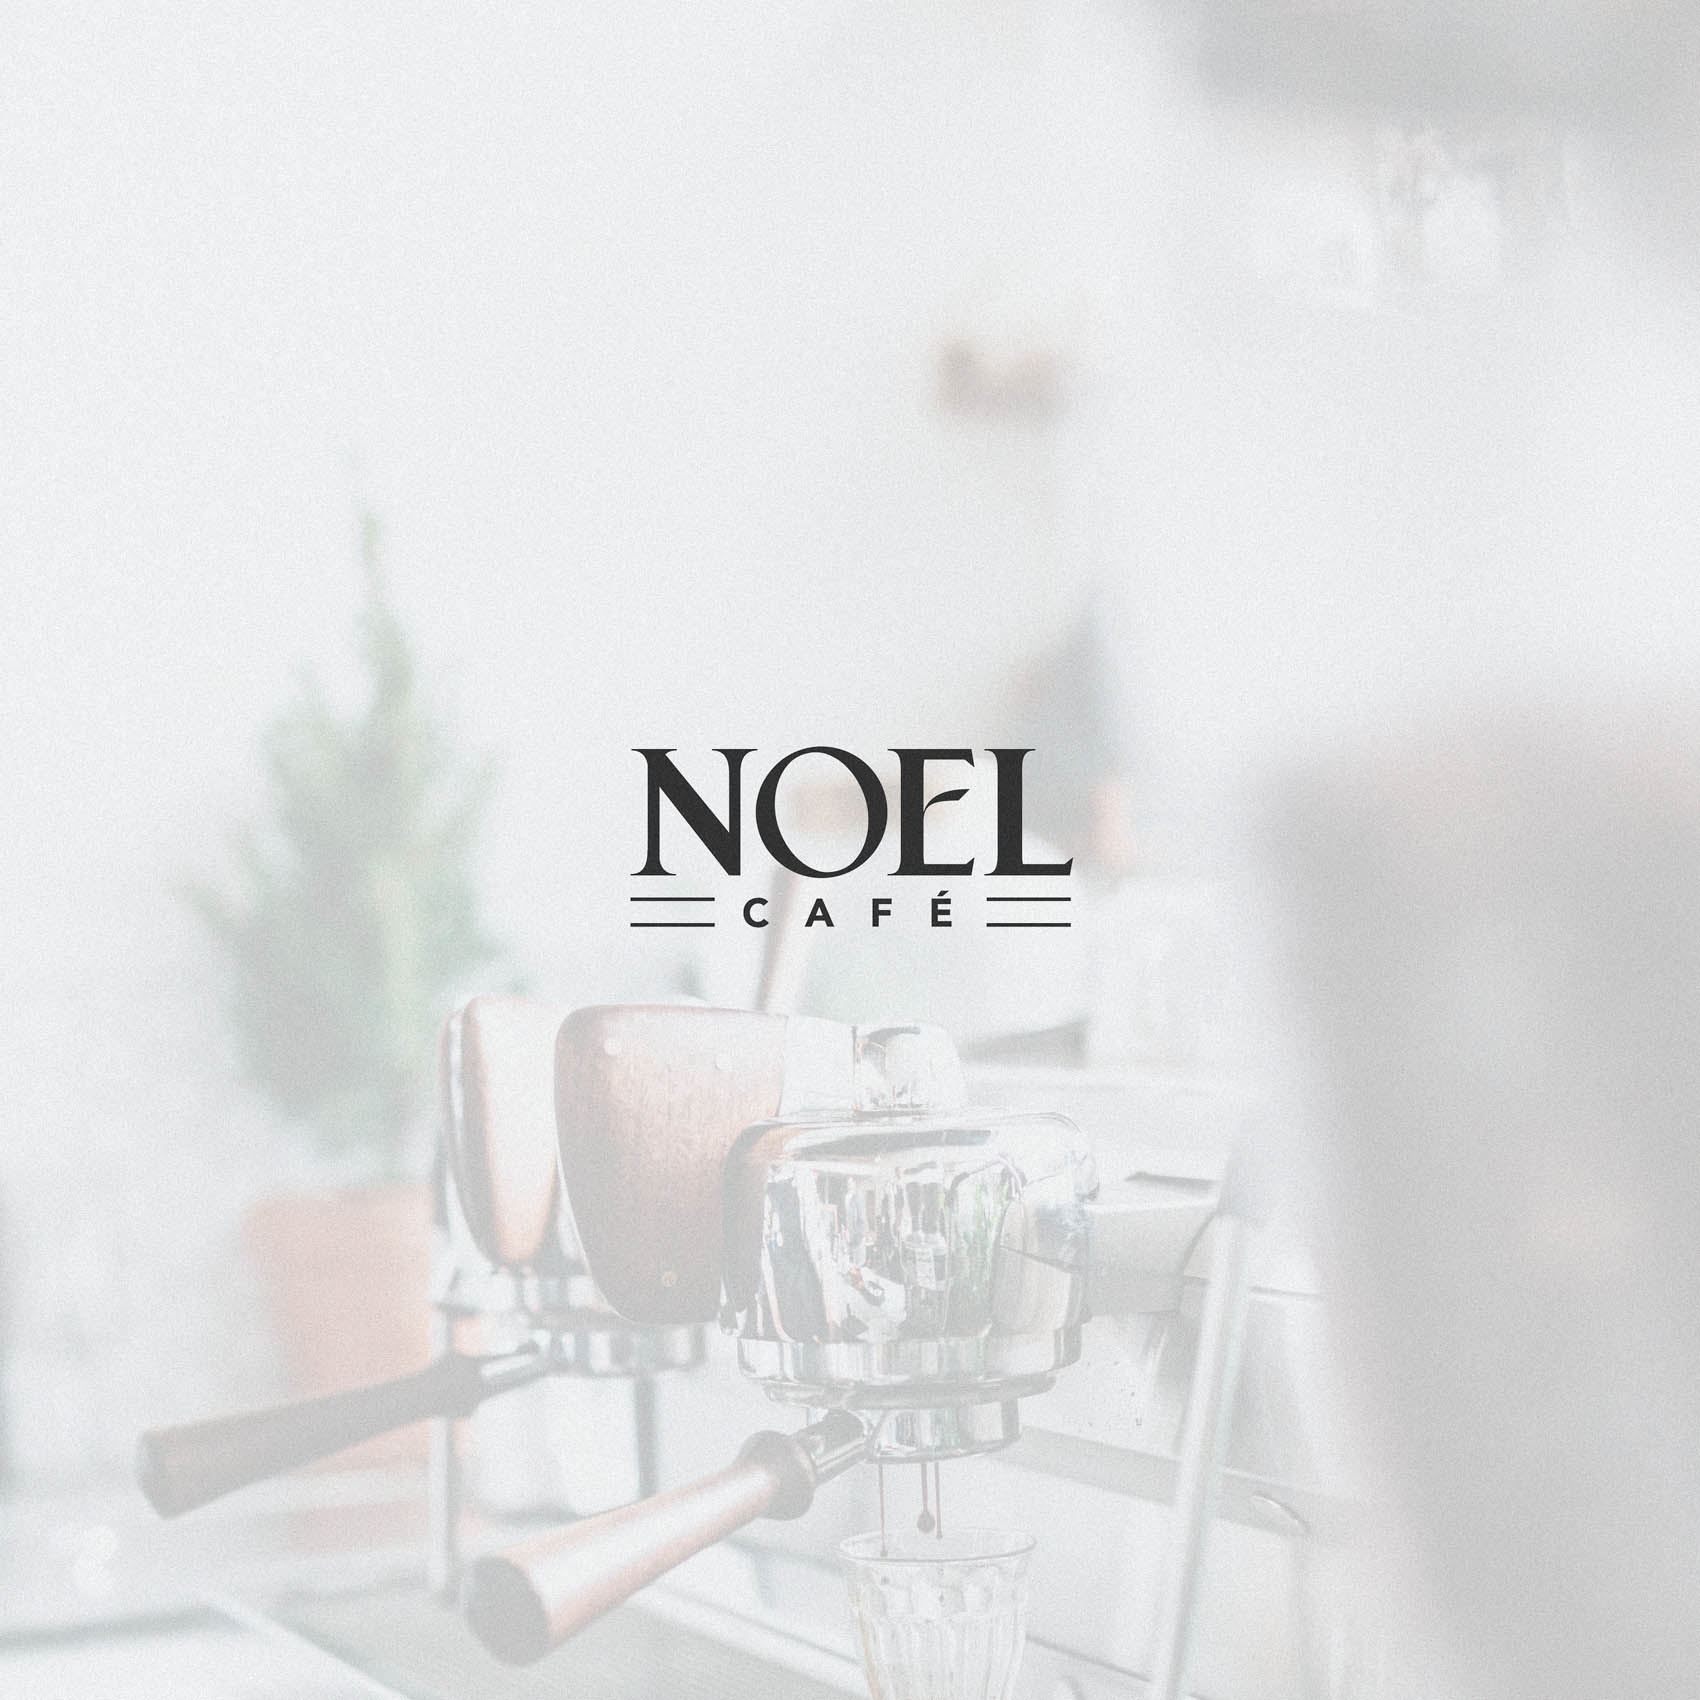 noel cafe - coffee shop logo high end luxury branding barista14